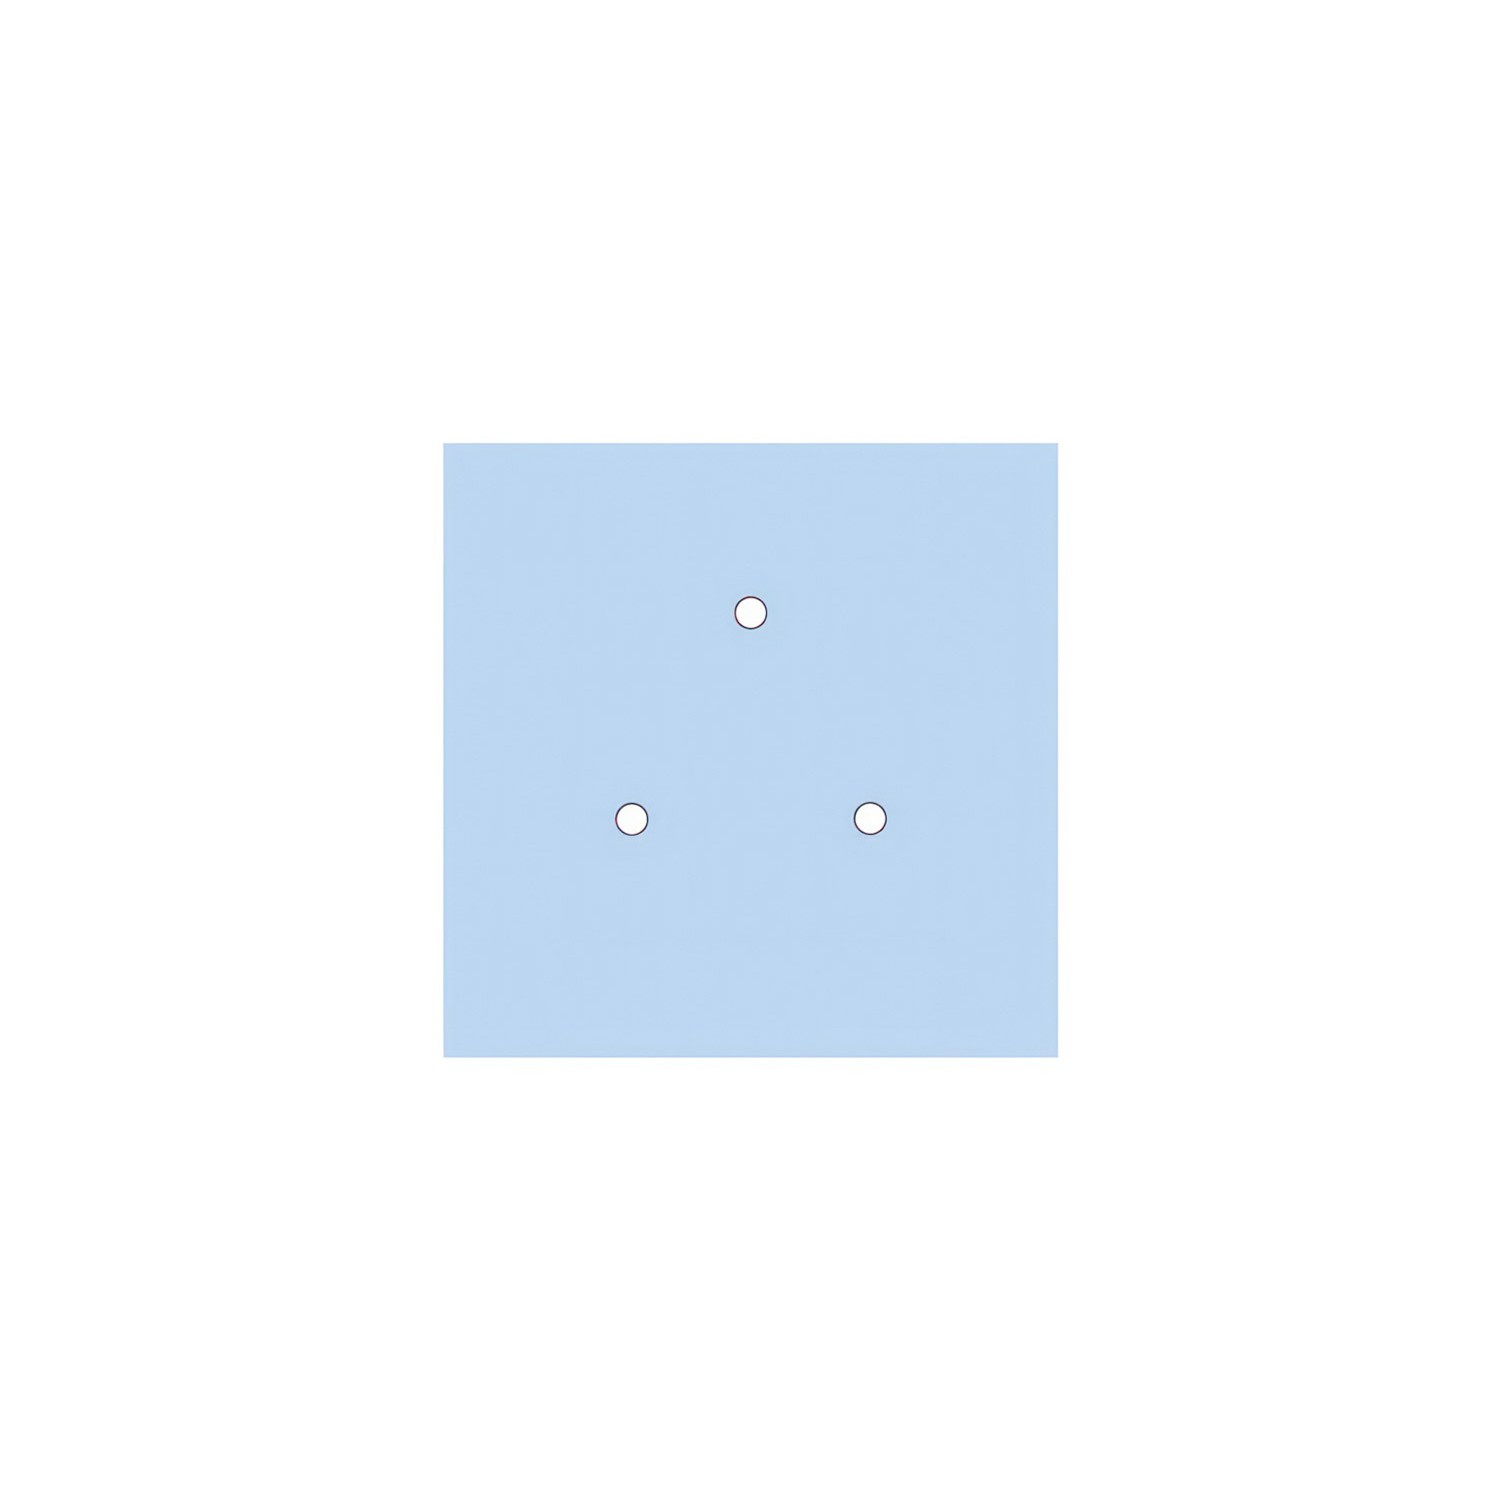 Komplett 200mm takkopp Rose-One System kvadrat - 3 hål (i triangel) og 4 sidehål